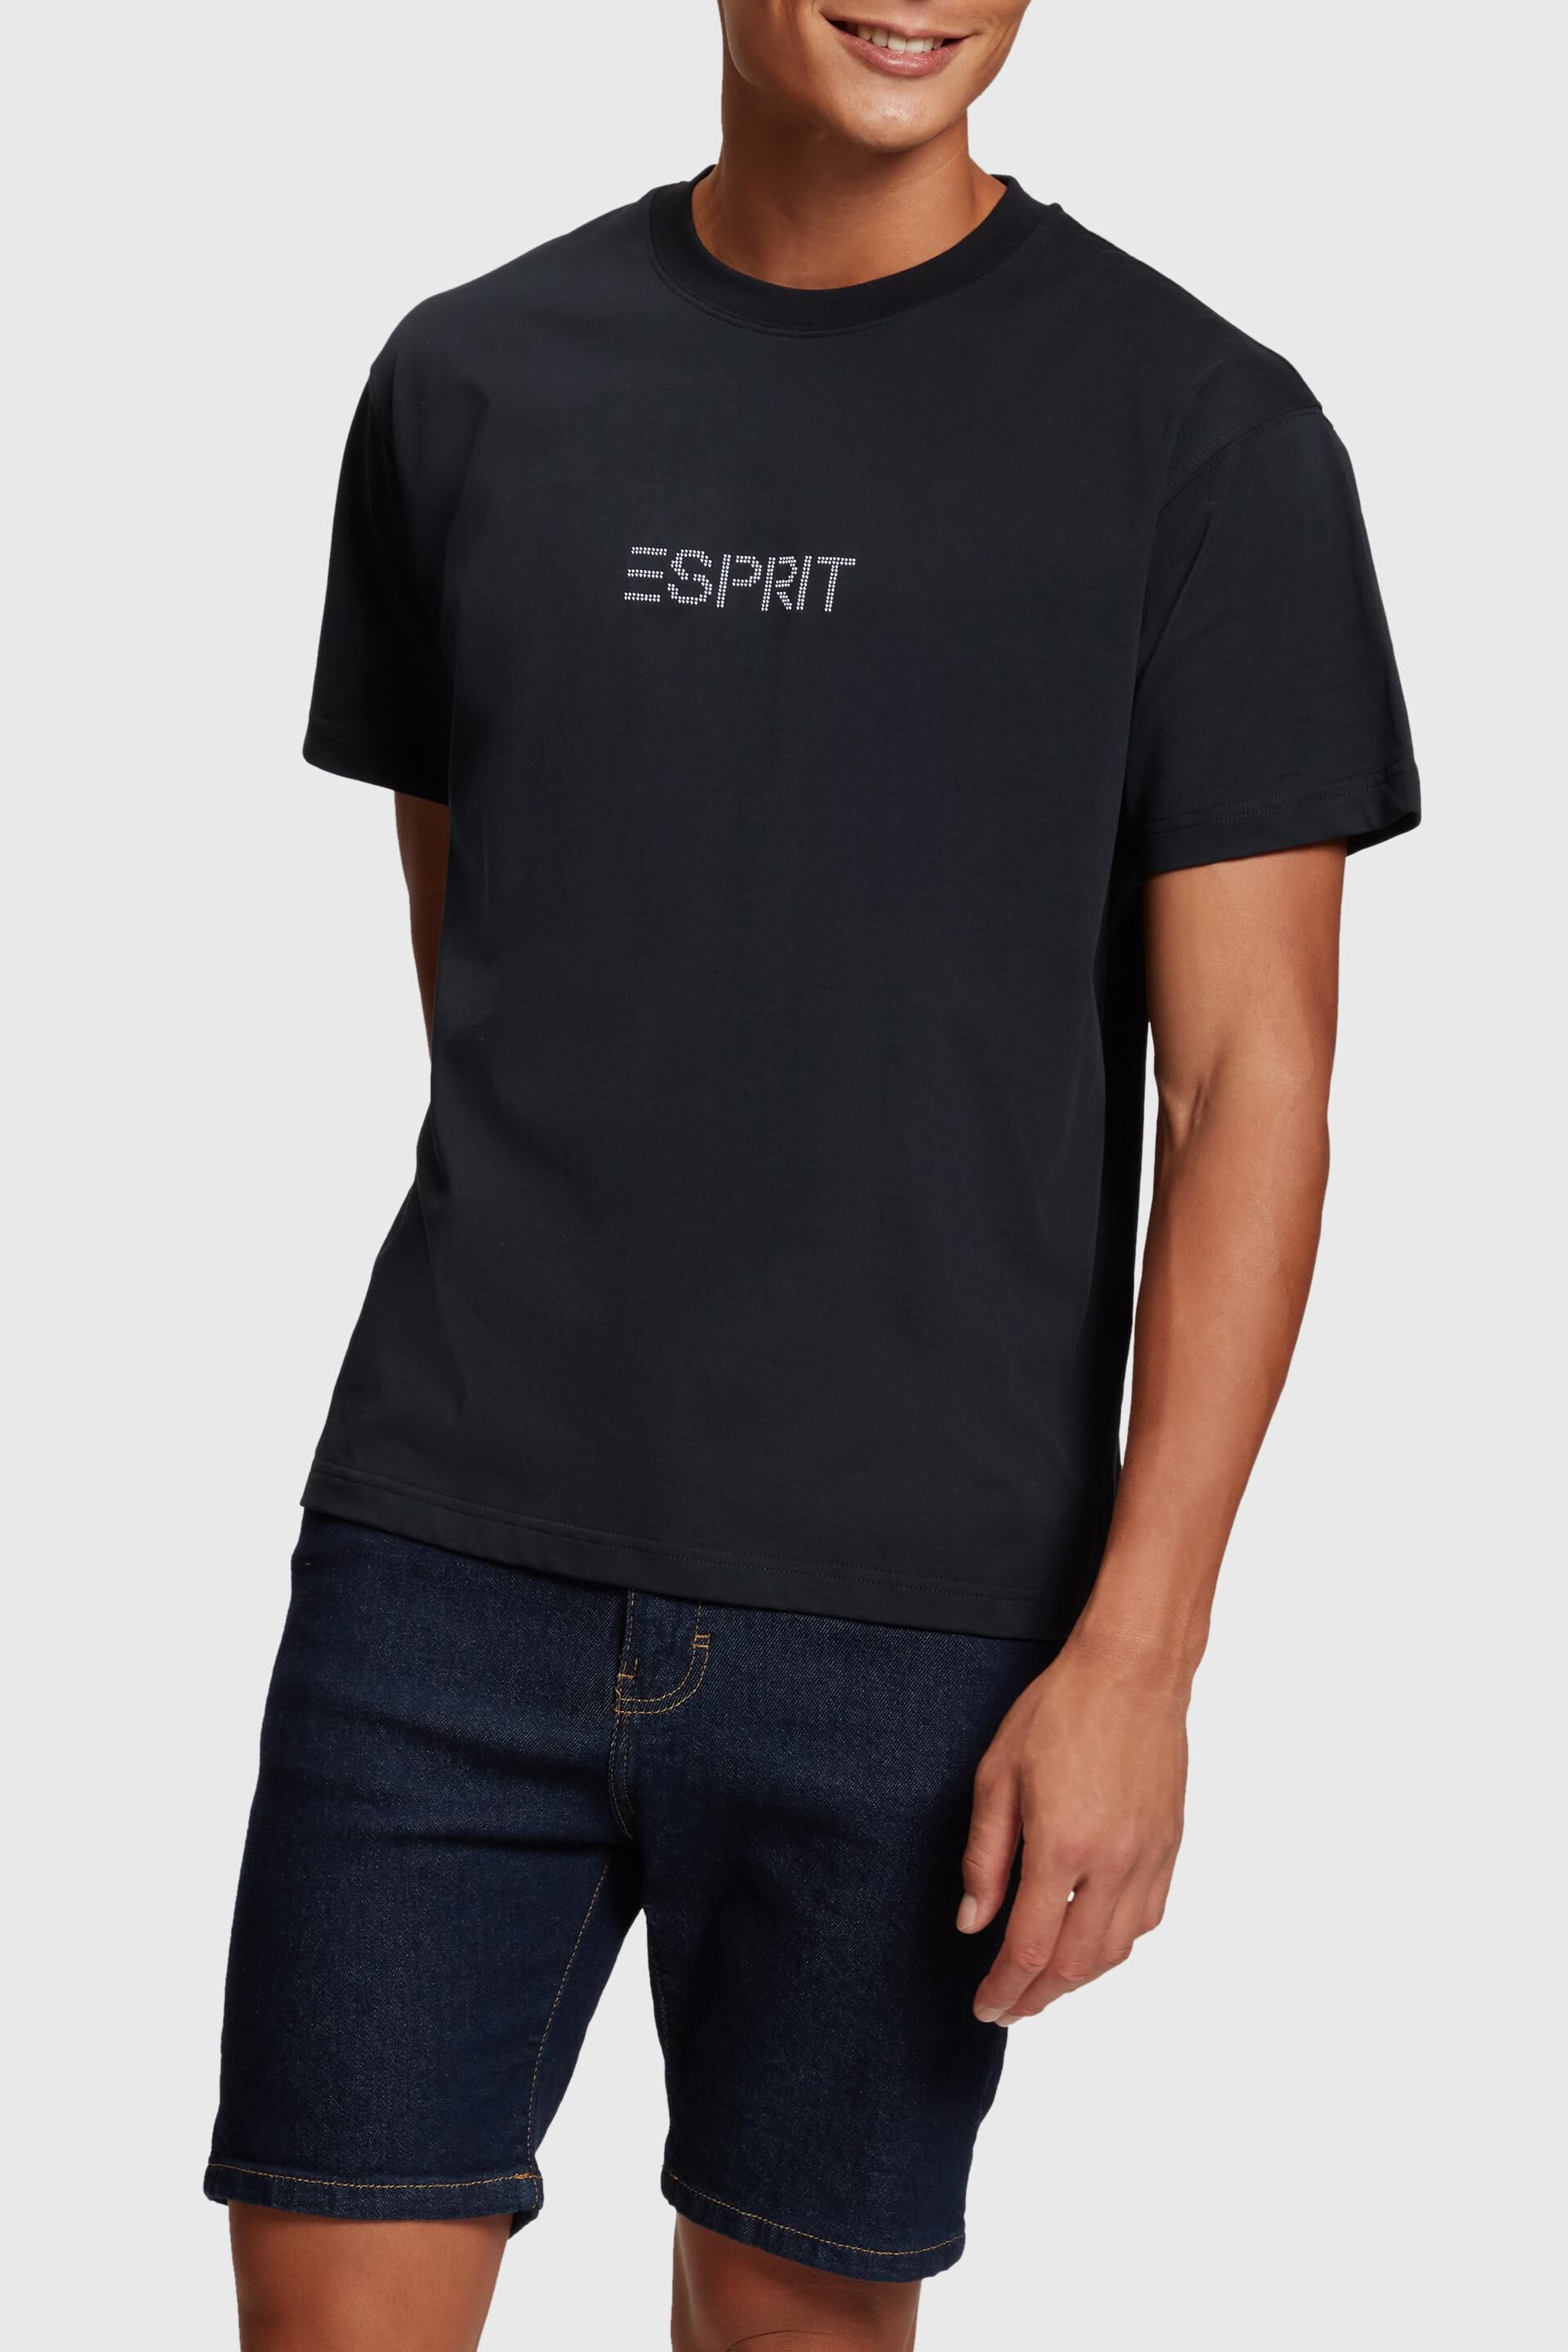 Esprit t-shirt applique Stud logo